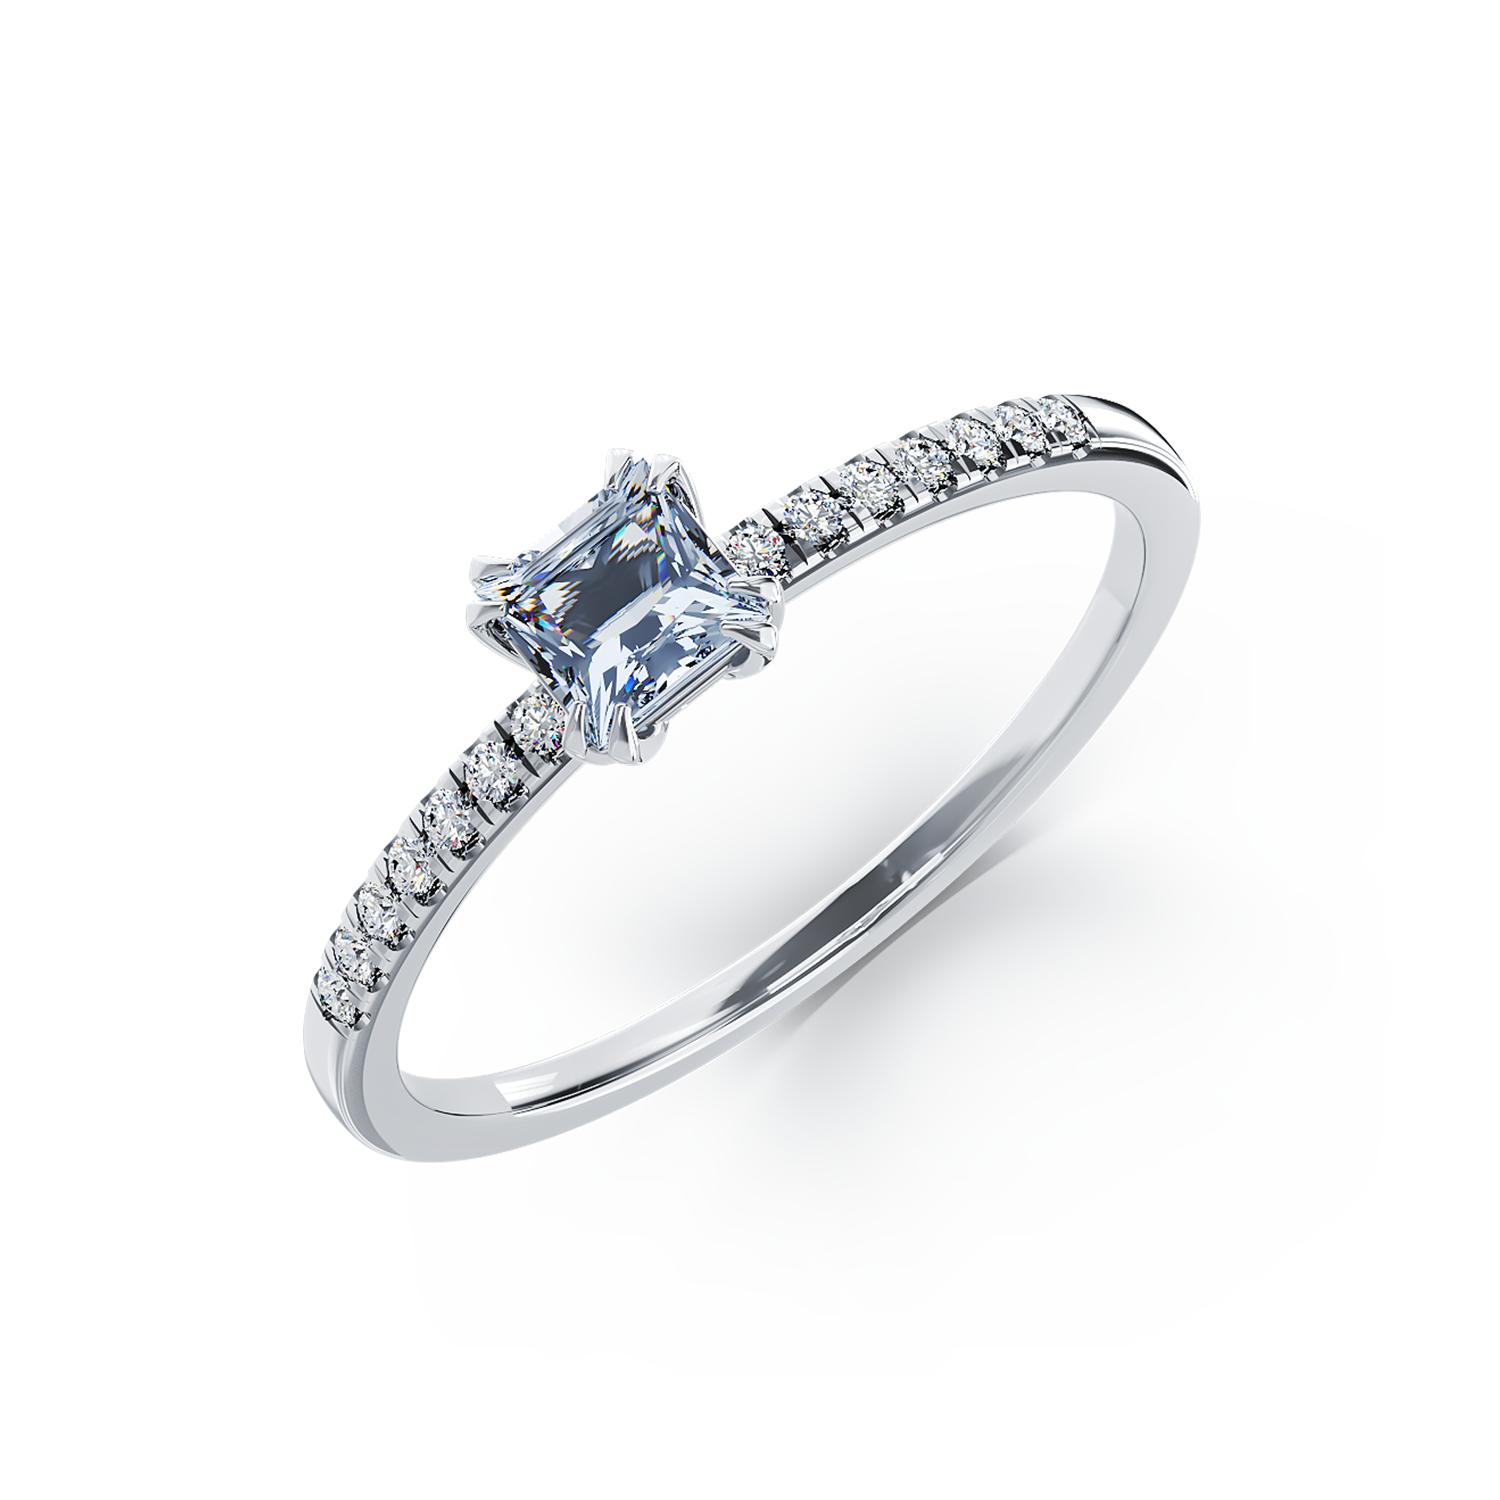 18K white gold engagement ring with 0.26ct aquamarine and 0.06ct diamonds